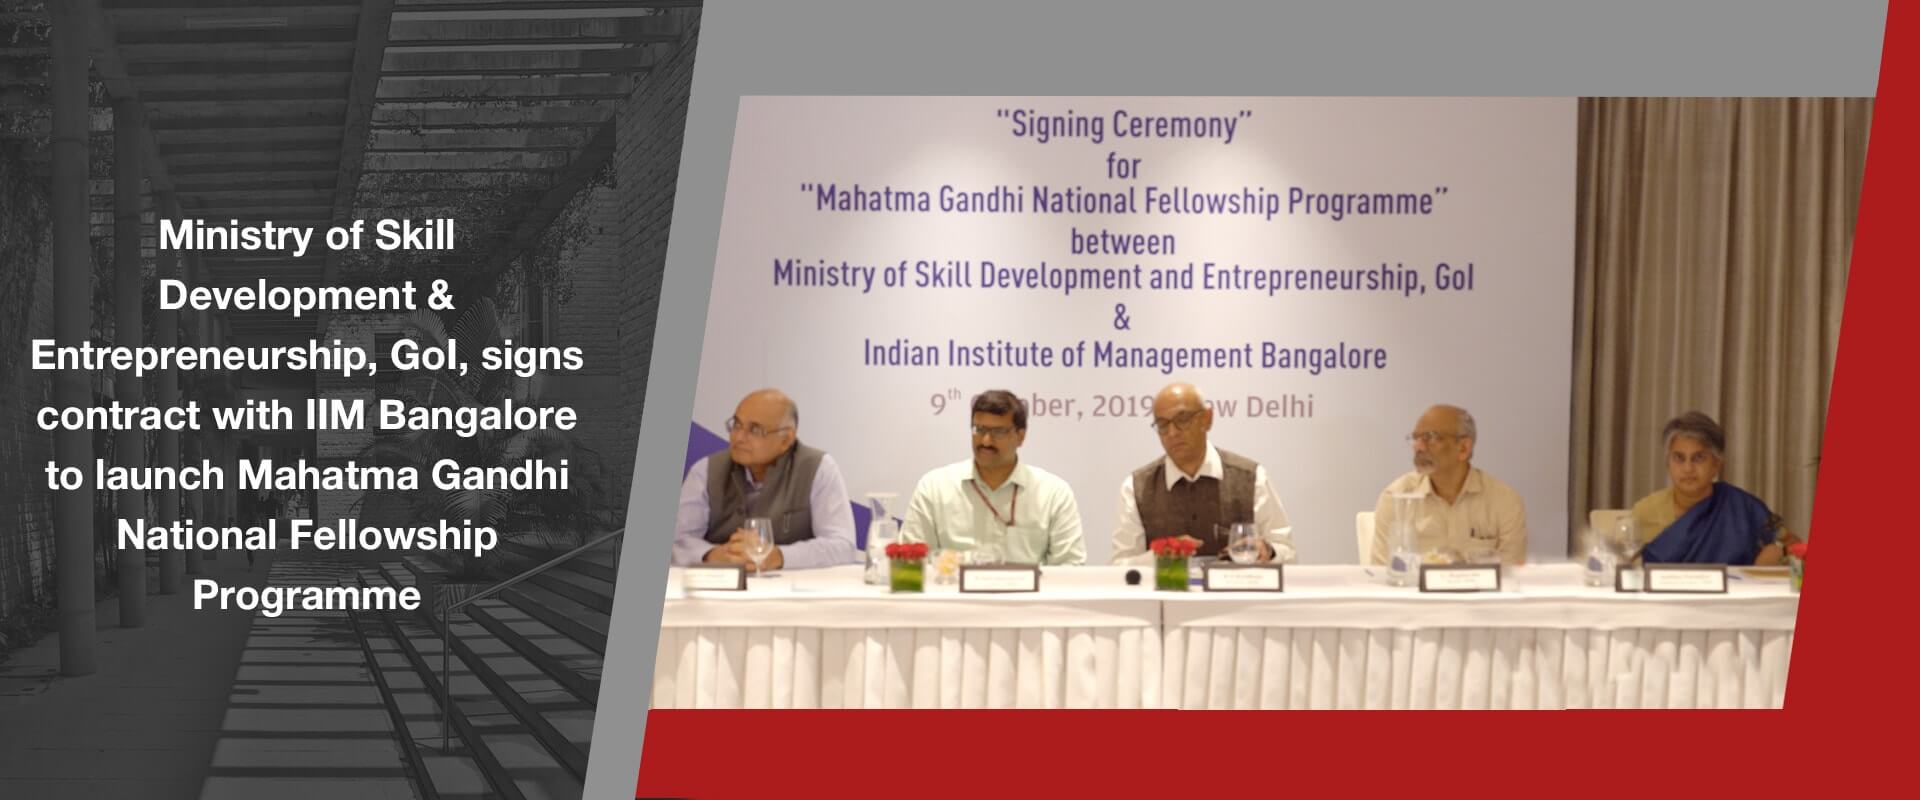 Opportunity for Graduates: Ministry of Skill Development and Entrepreneurship launches Mahatma Gandhi National Fellowship Programme with IIM Bangalore